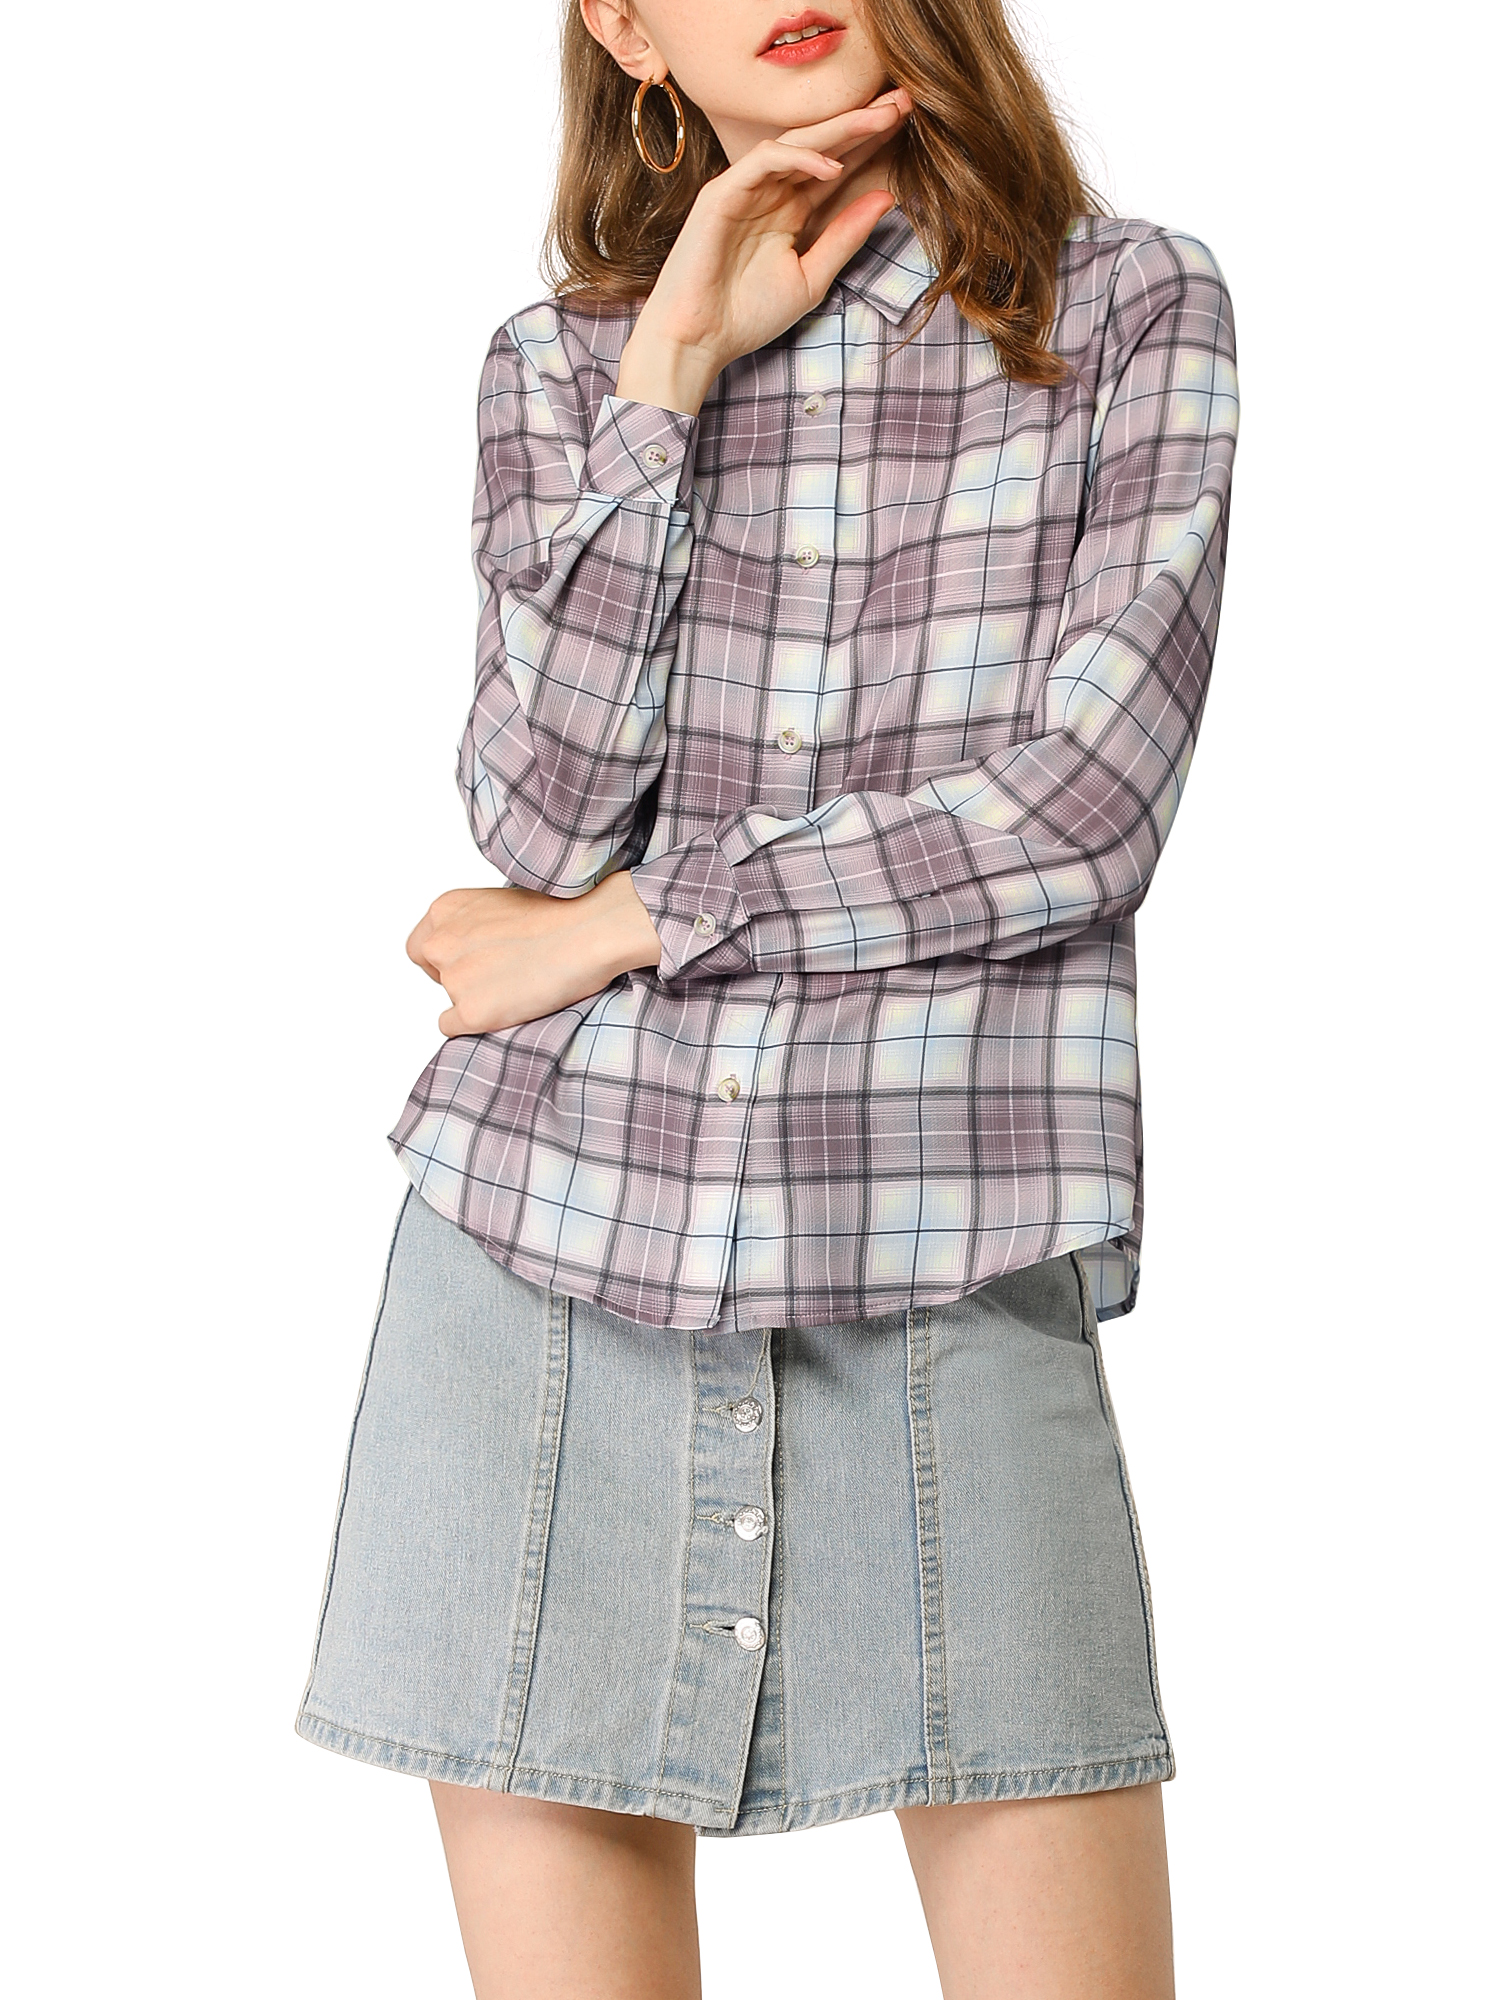 MODA NOVA Junior's Plaid Long Sleeves Button Up Shirt Purple S - image 3 of 7